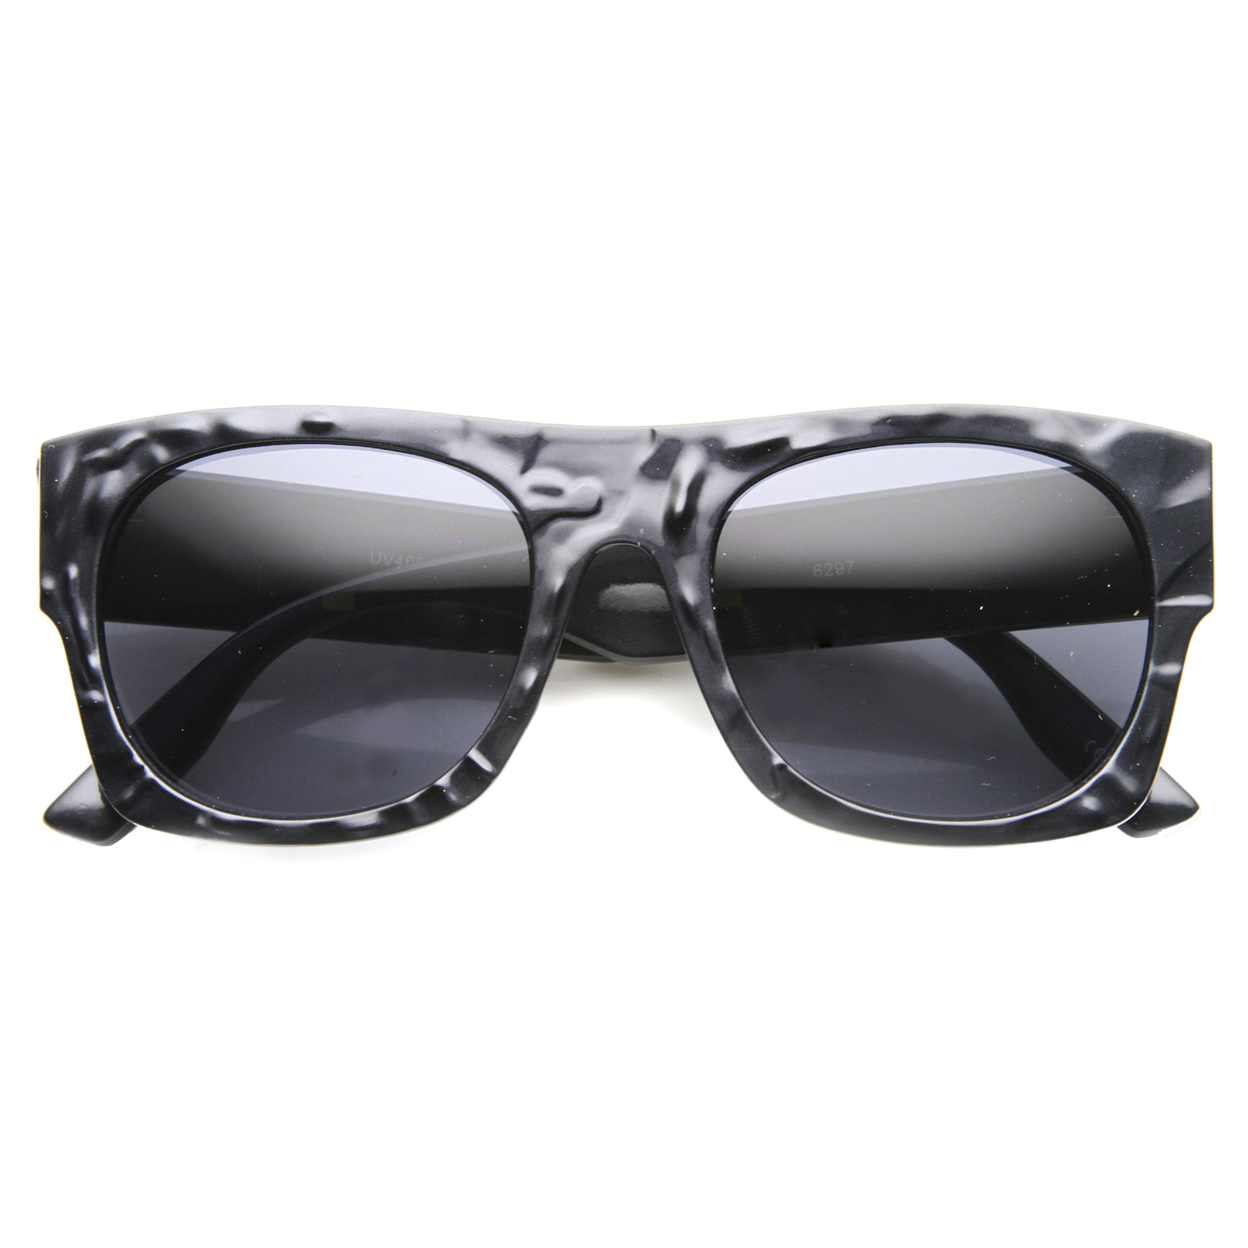 Unisex Rectangular Sunglasses With UV400 Protected Composite Lens 9865 - Matte Black / Lavender